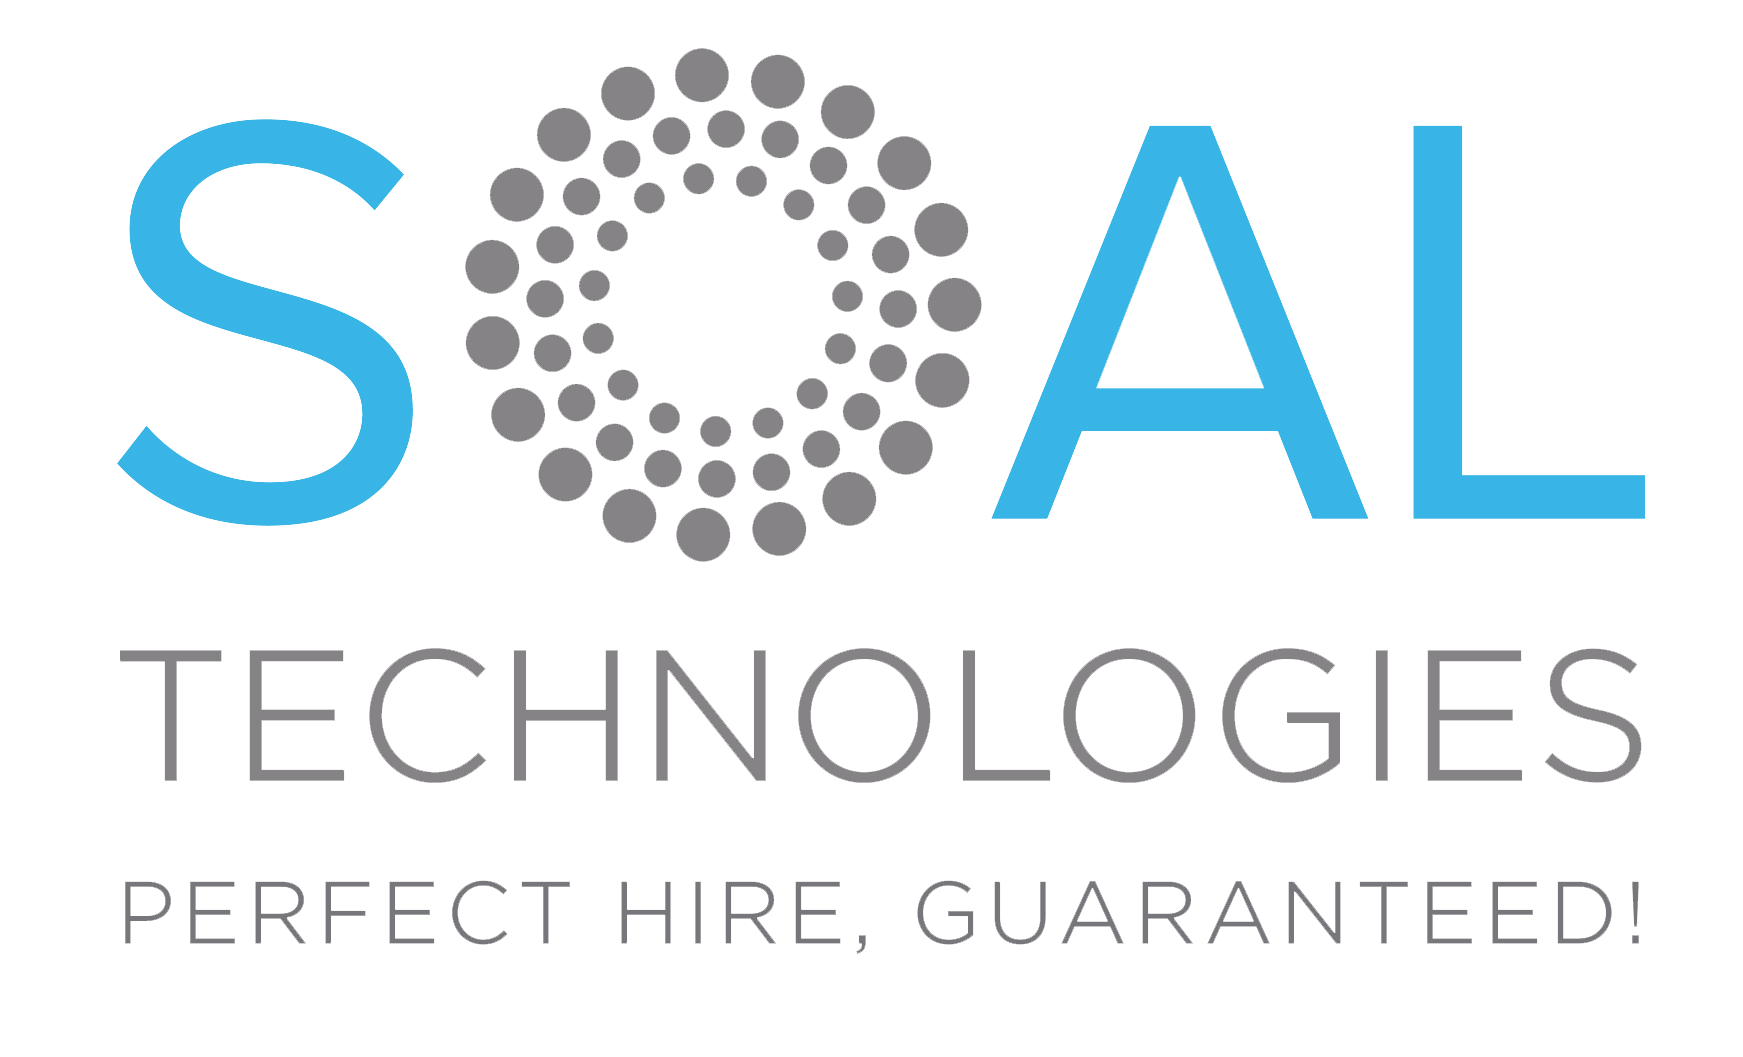 SOAL Technologies LLC Profile